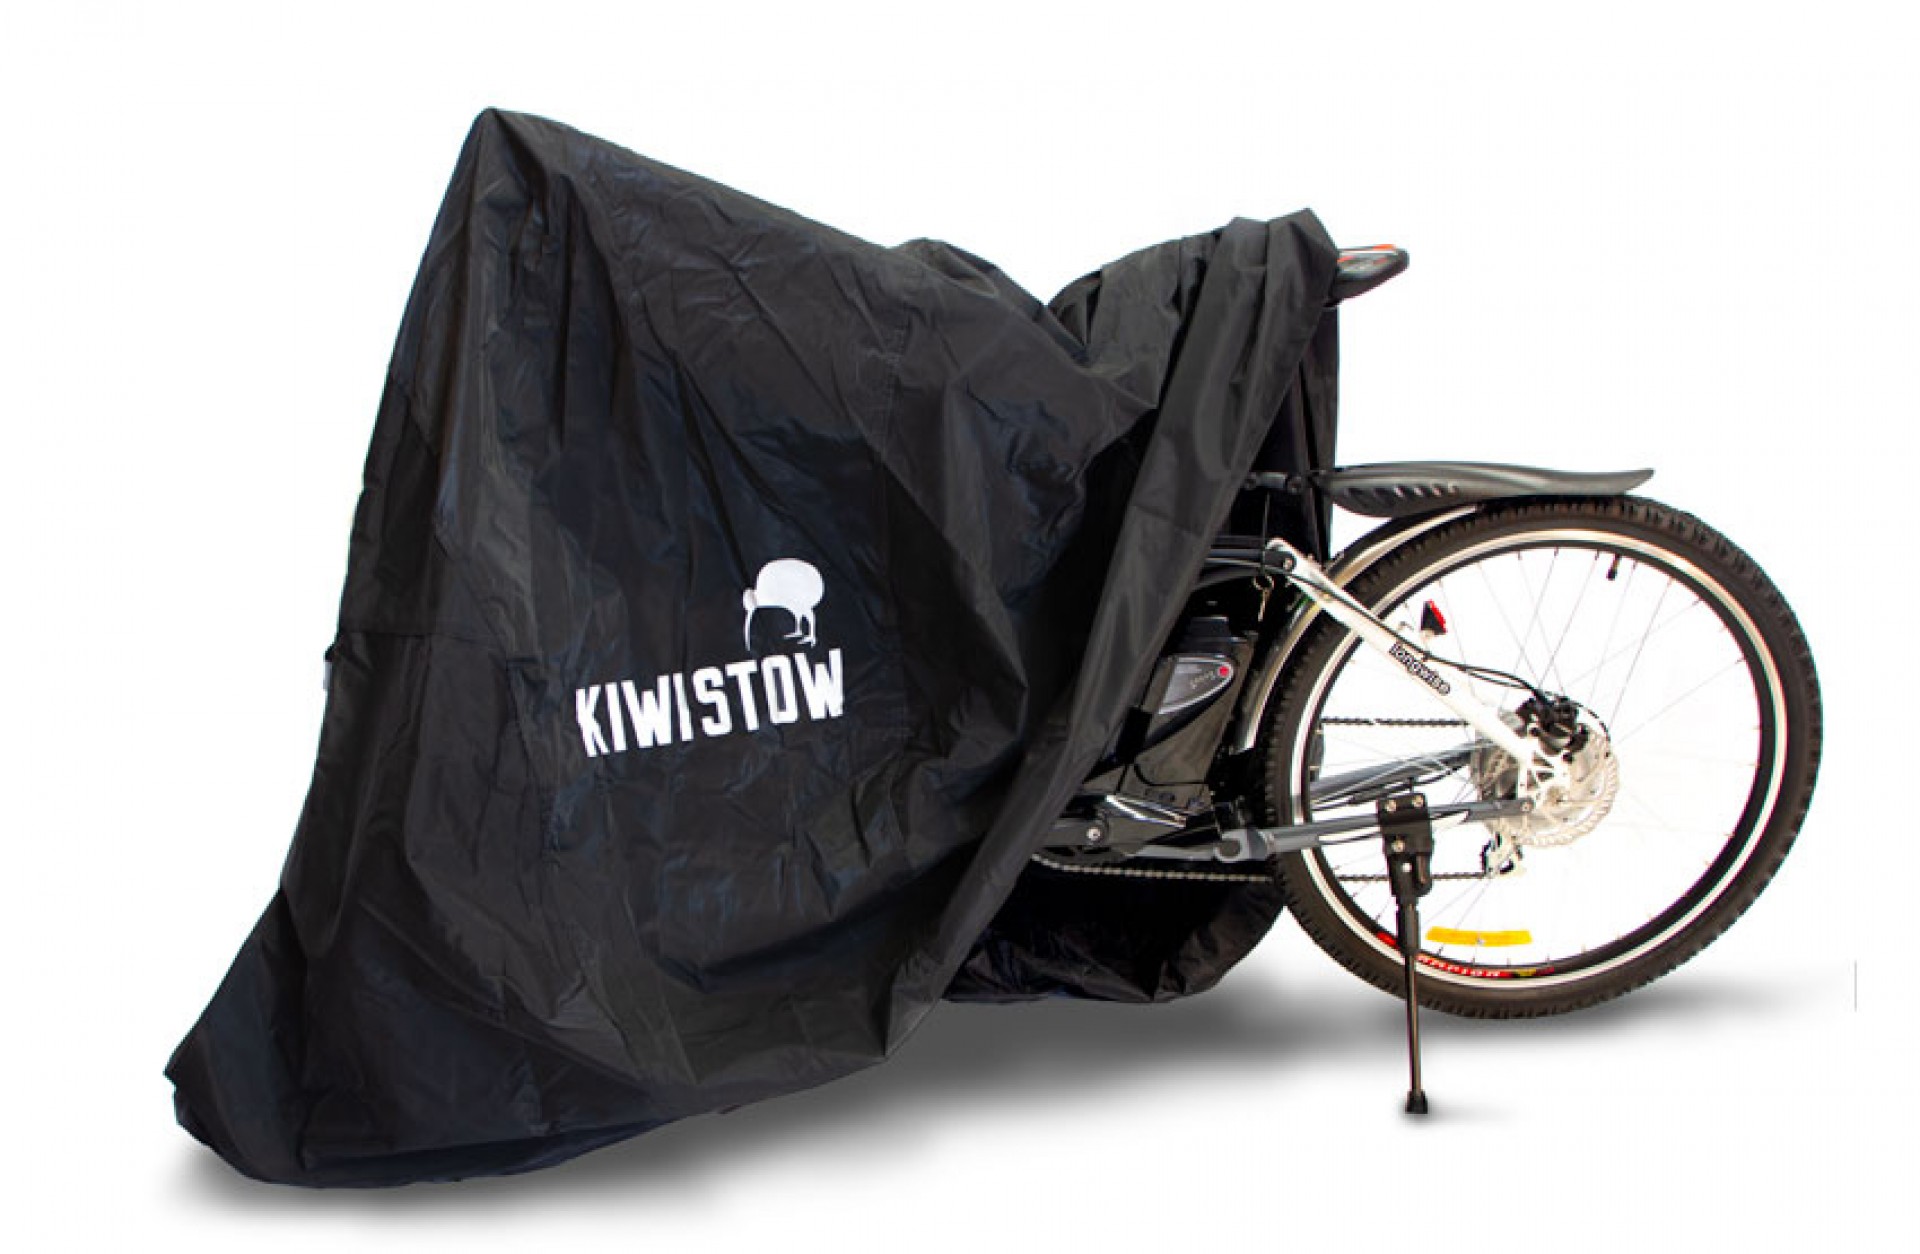 Kiwistow Bicycle Cover